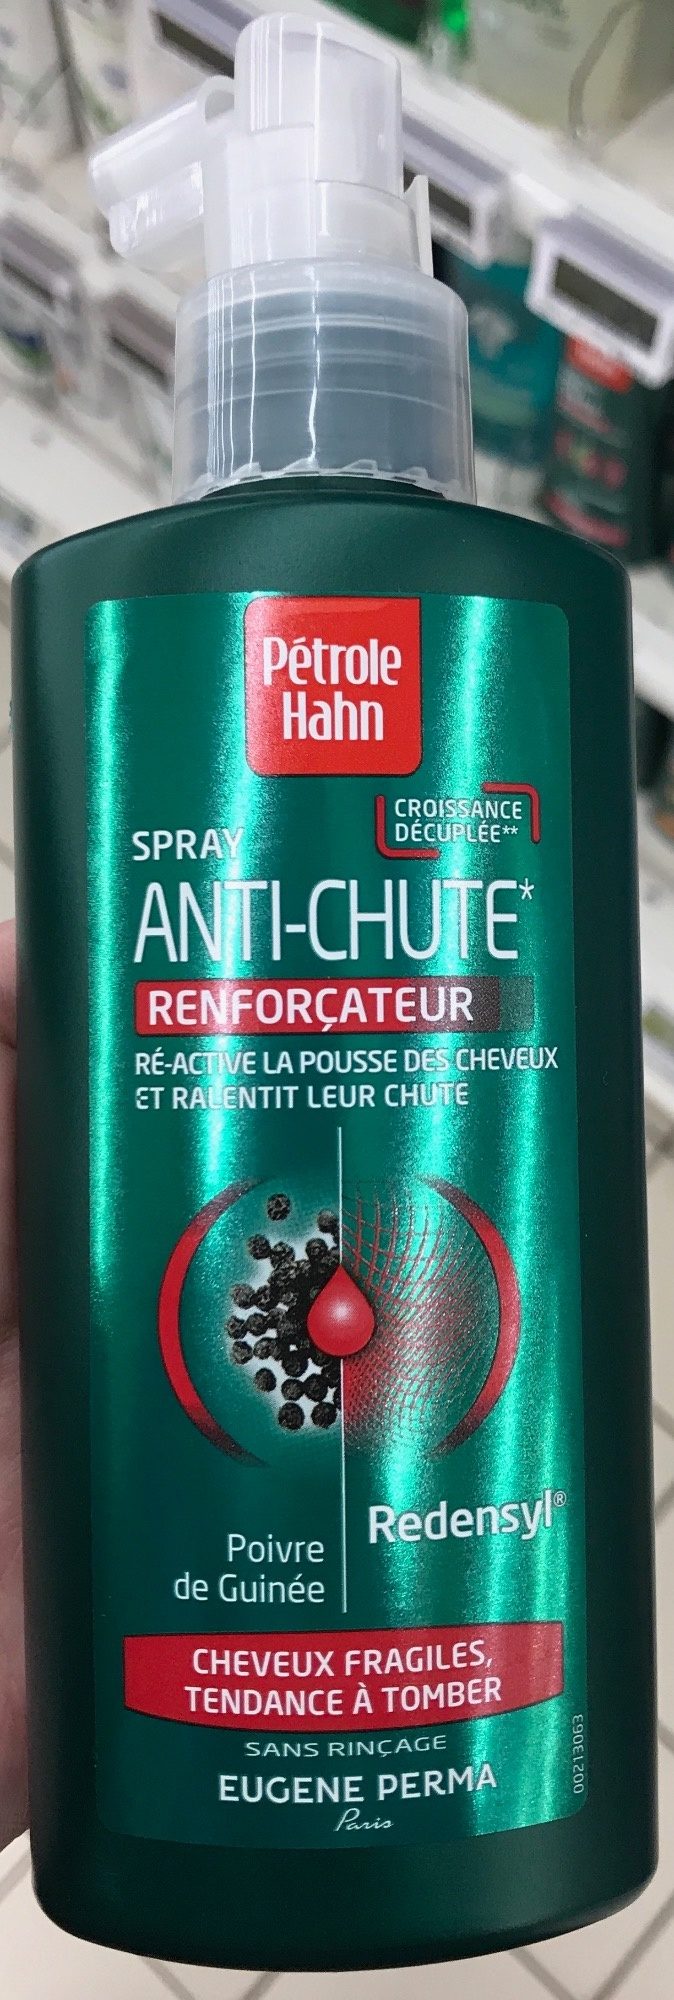 Spray anti-chute renforçateur - Product - fr